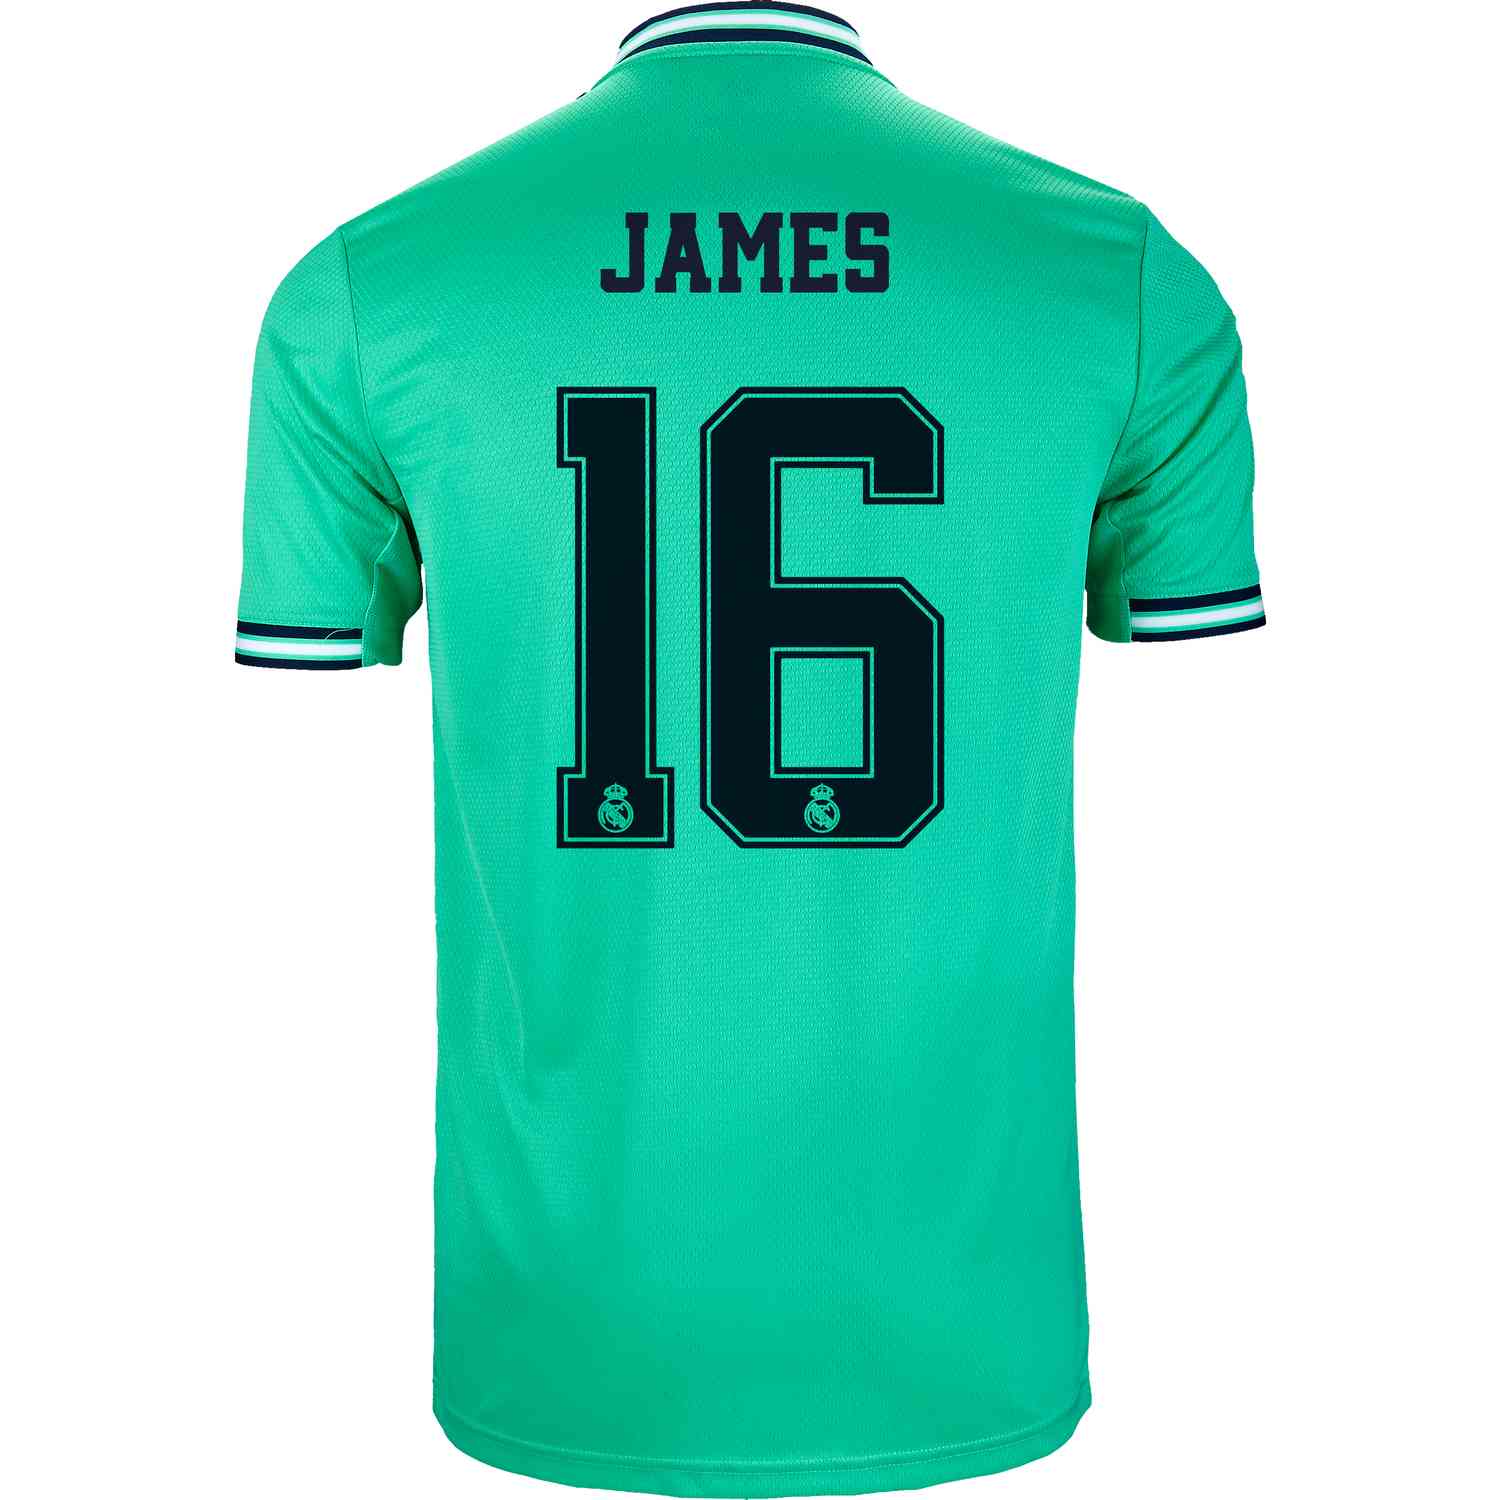 kennisgeving Bezwaar helder 2019/20 adidas James Rodriguez Real Madrid 3rd Jersey - SoccerPro